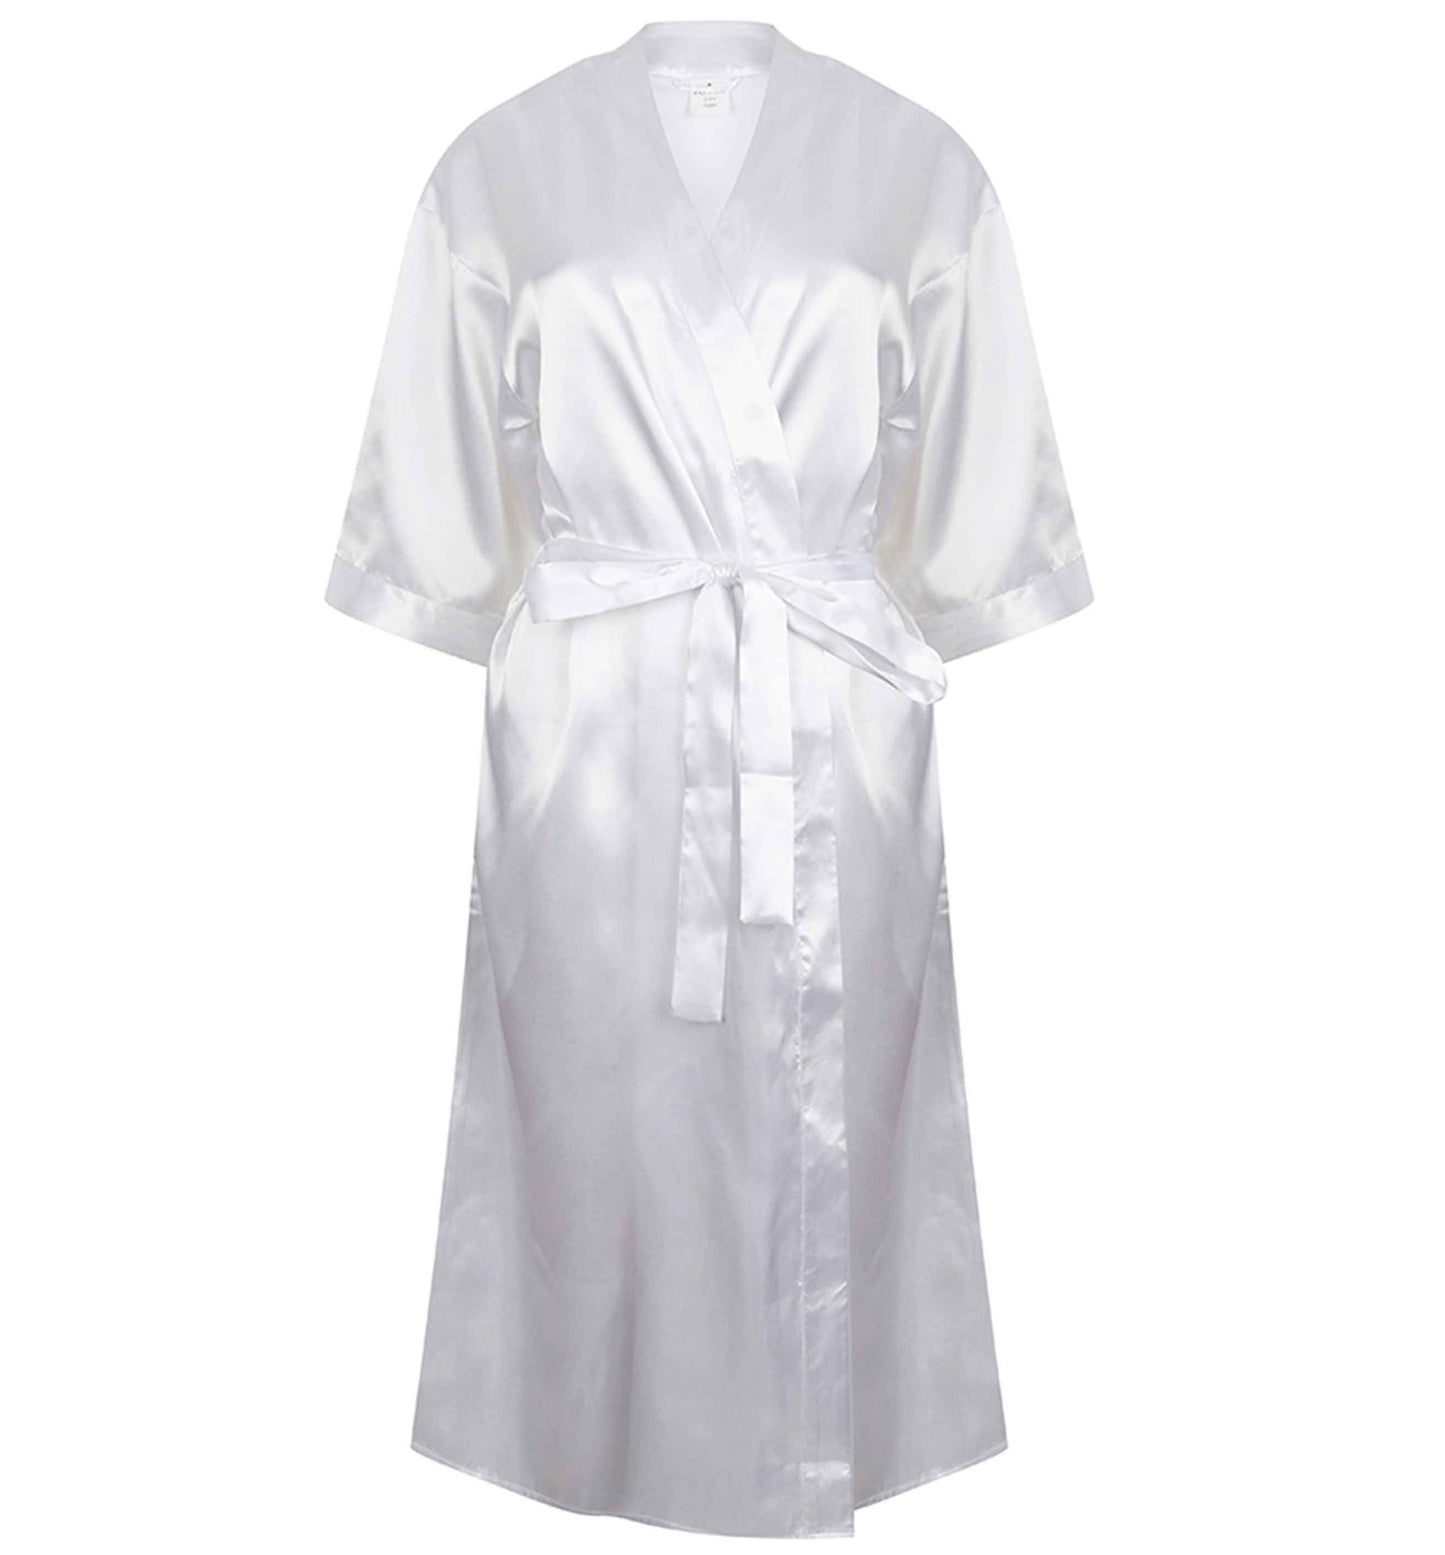 I love you watts and watts | 8-18 | Kimono style satin robe | Ladies dressing gown